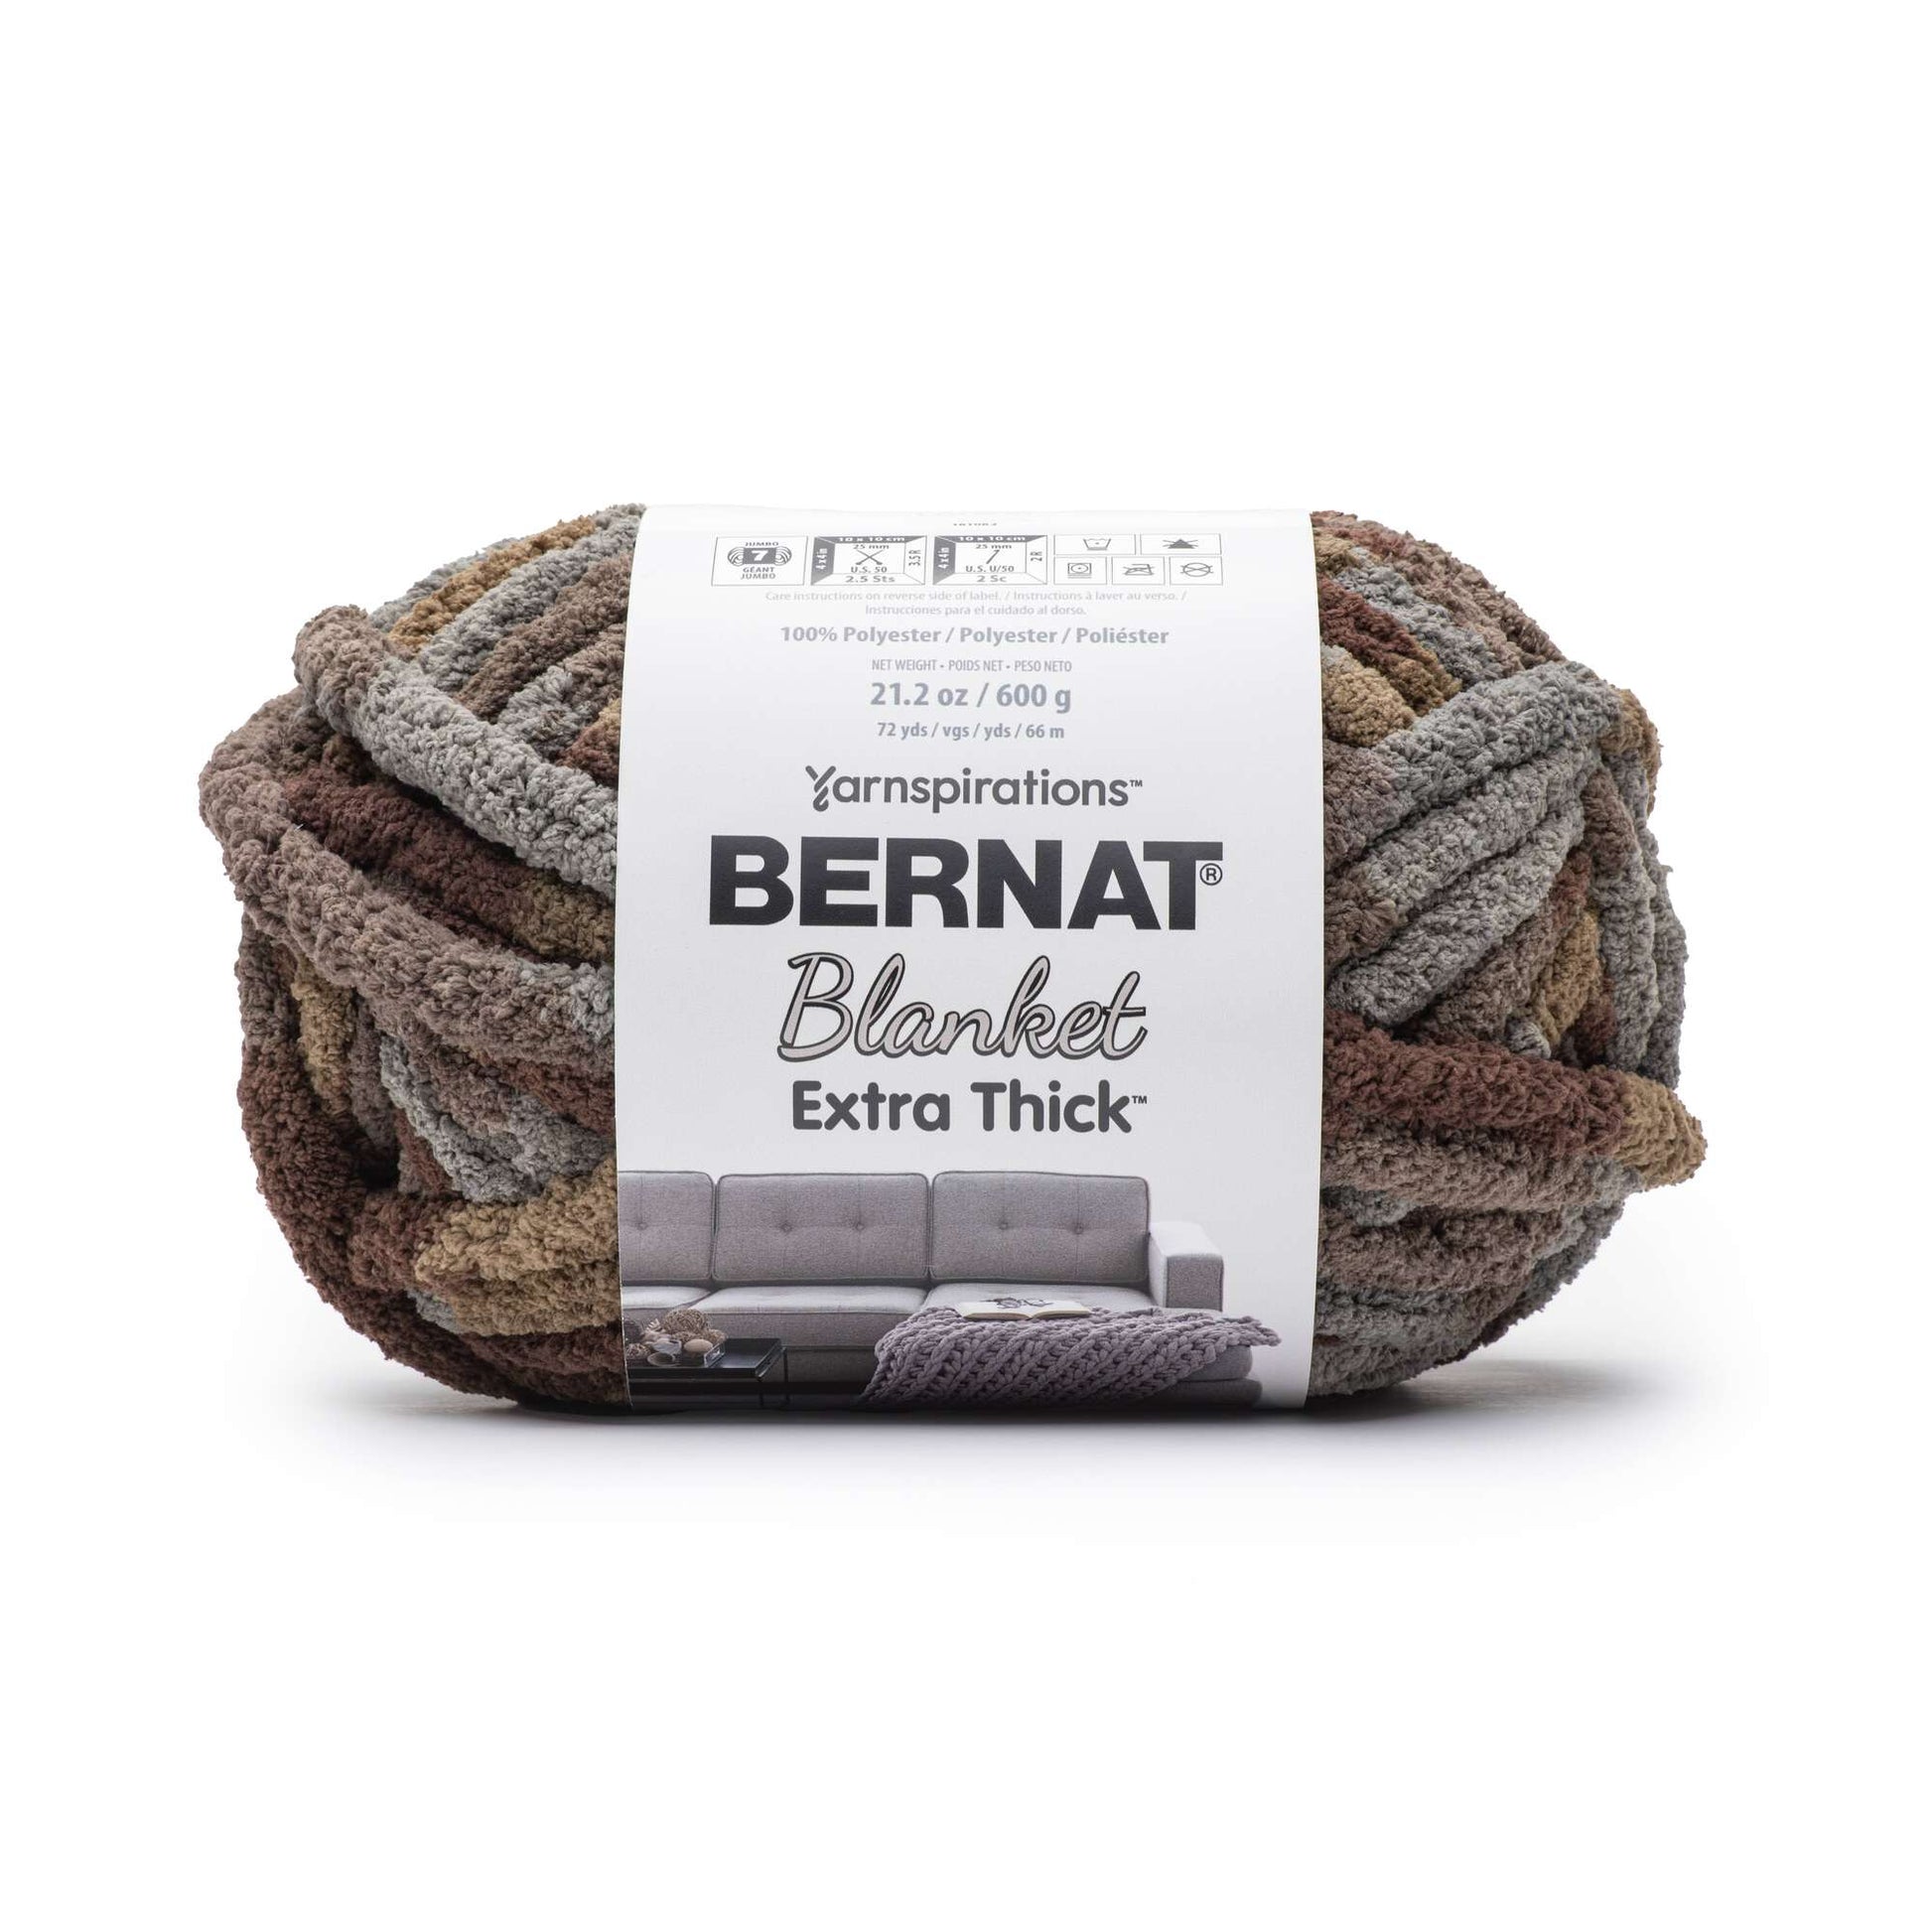 Bernat Blanket Extra Thick Yarn (600g/21.2oz) Leather